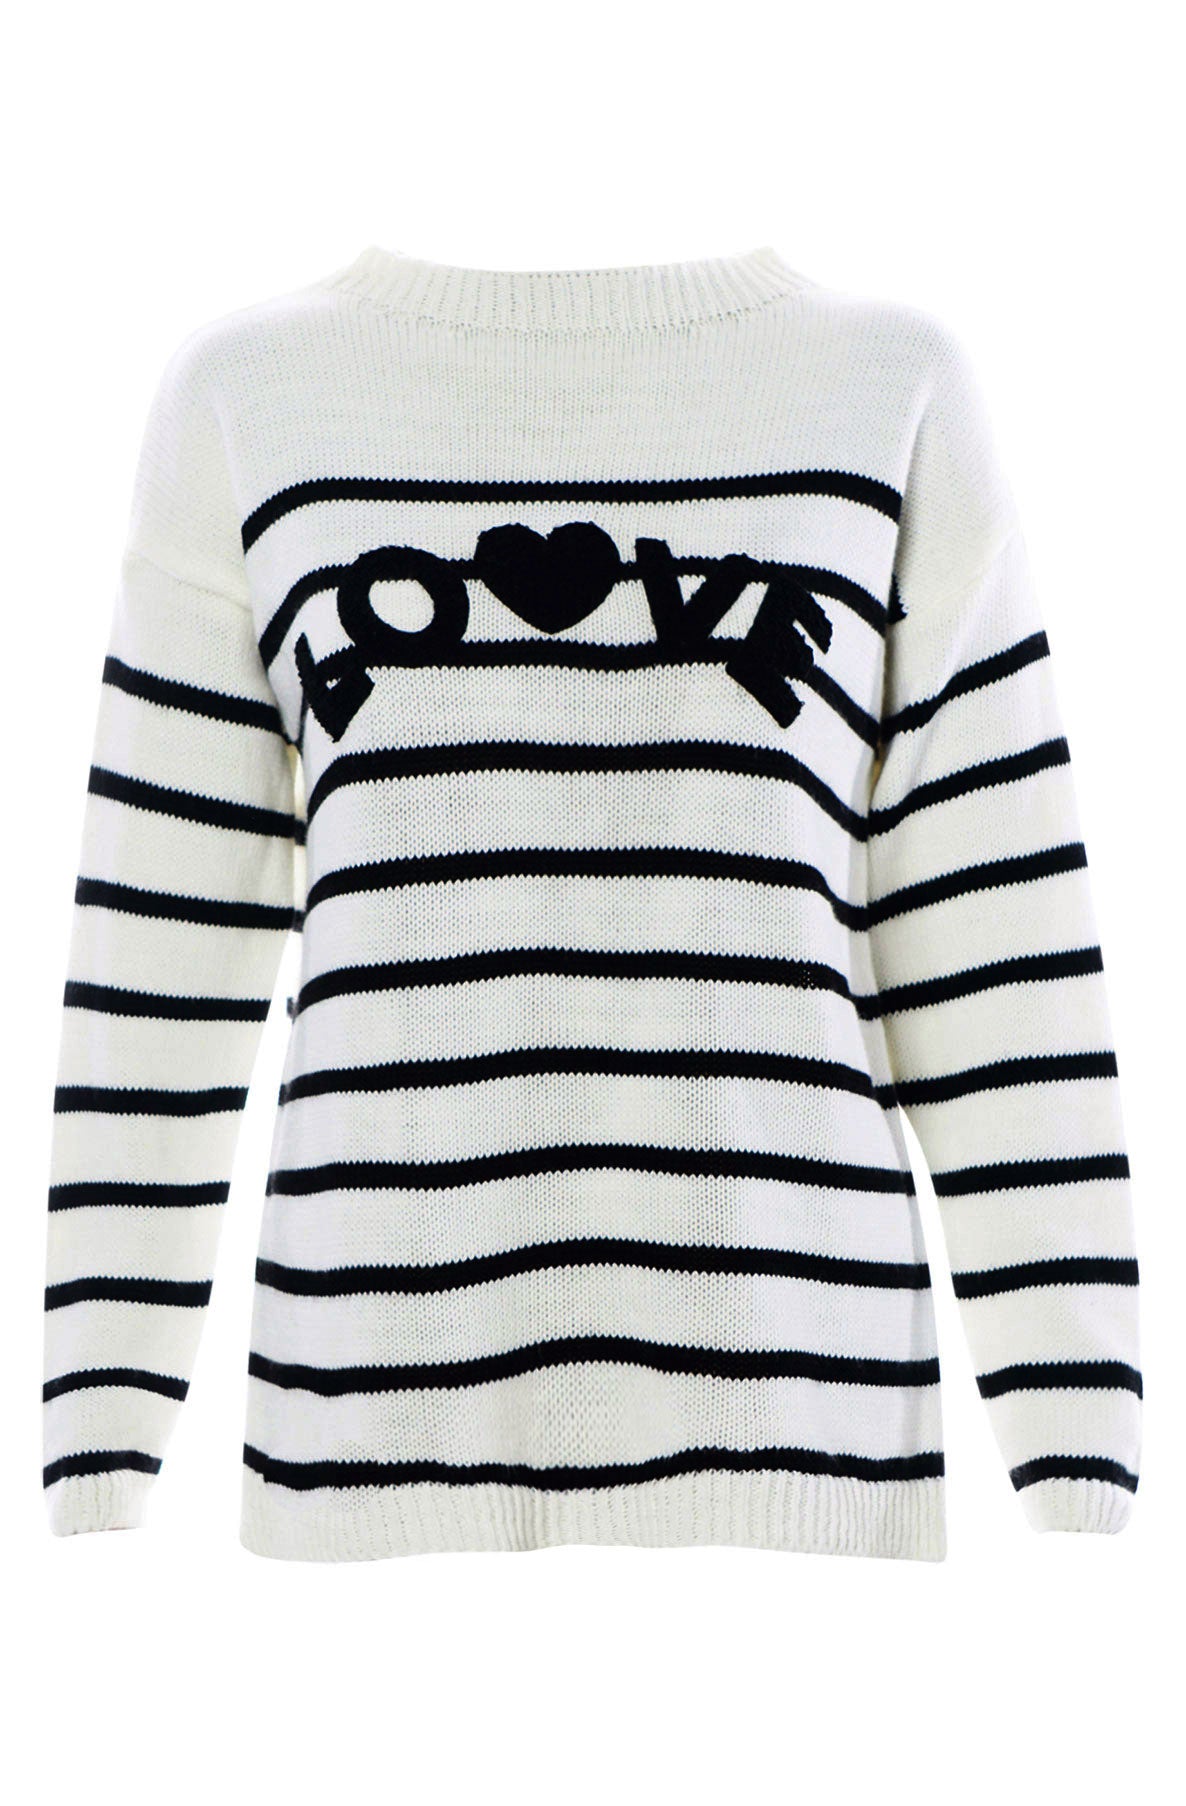 Bruna Striped 'LOVE' Knitted Jumper Sweater Top-Ivory